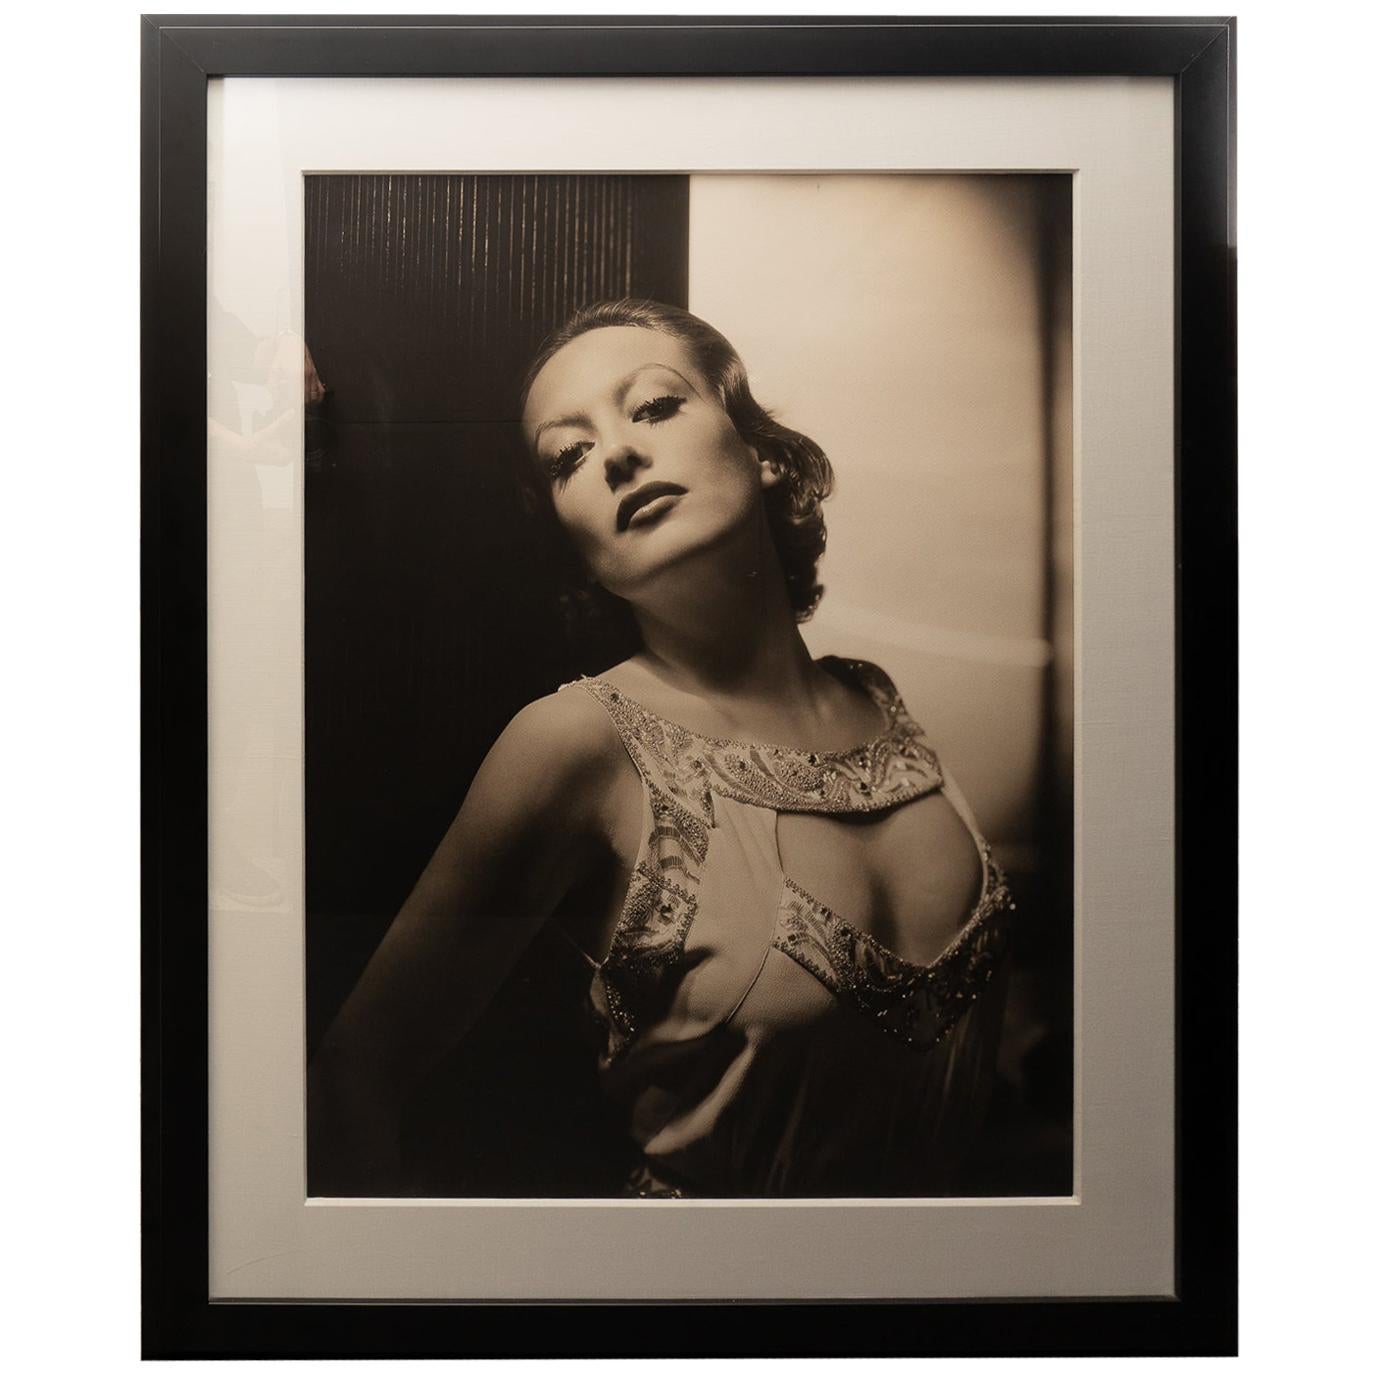 George Hurrell Photograph of Joan Crawford